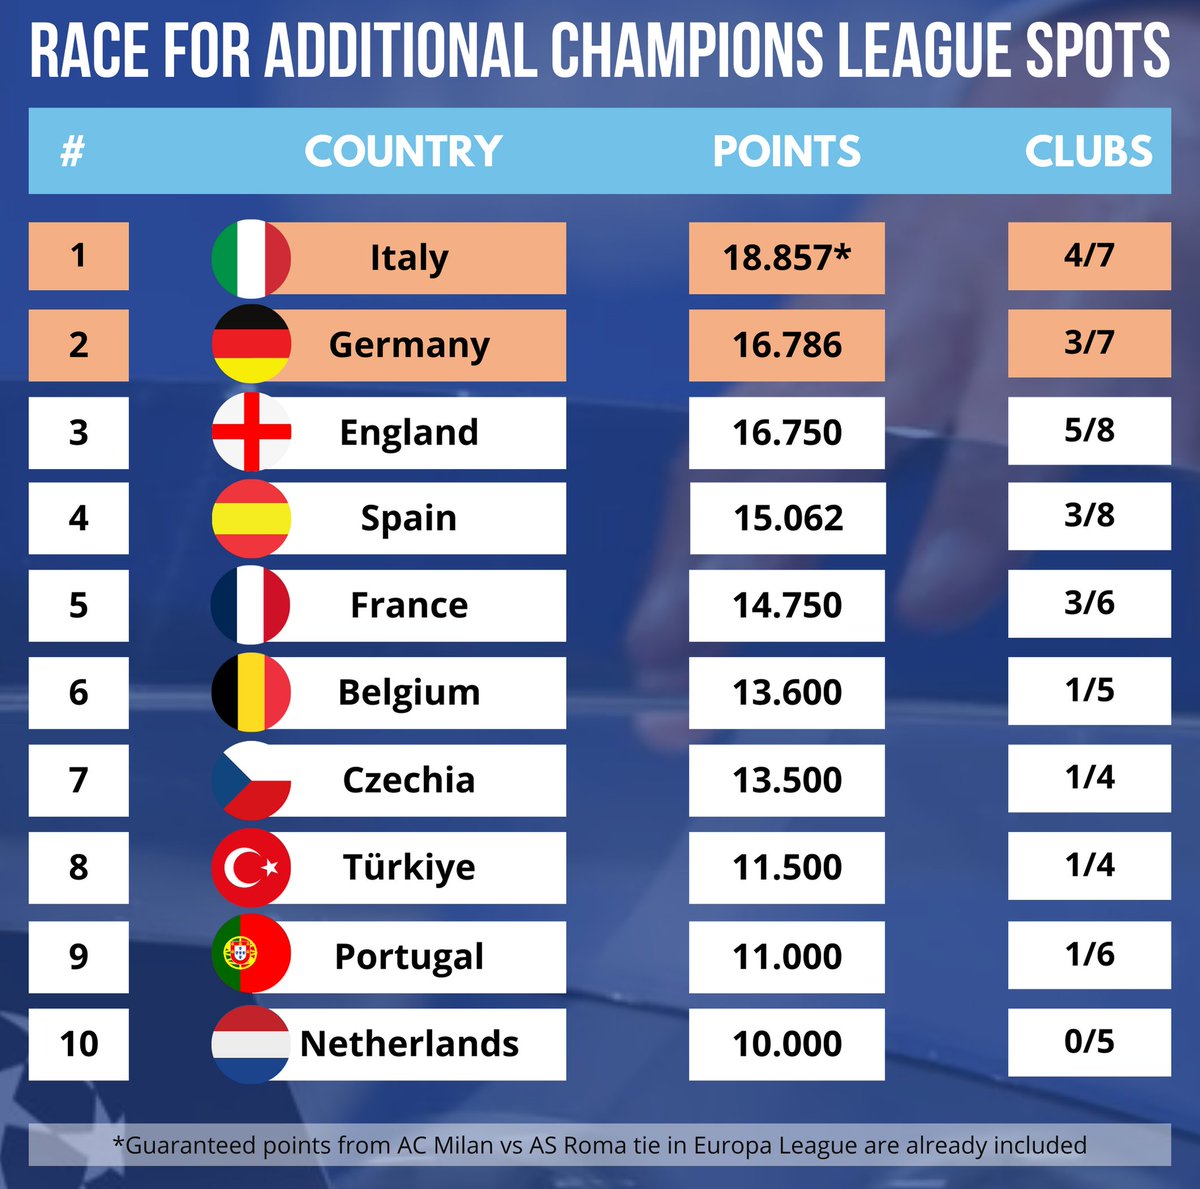 To secure extra Champions League spot: 🇮🇹 Italy - 99.8% 🏴󠁧󠁢󠁥󠁮󠁧󠁿 England - 57.8% 🇩🇪 Germany - 41.8% 🇫🇷 France - 0.2% 🇪🇸 Spain - 0.1% (% per @NilsMackay)